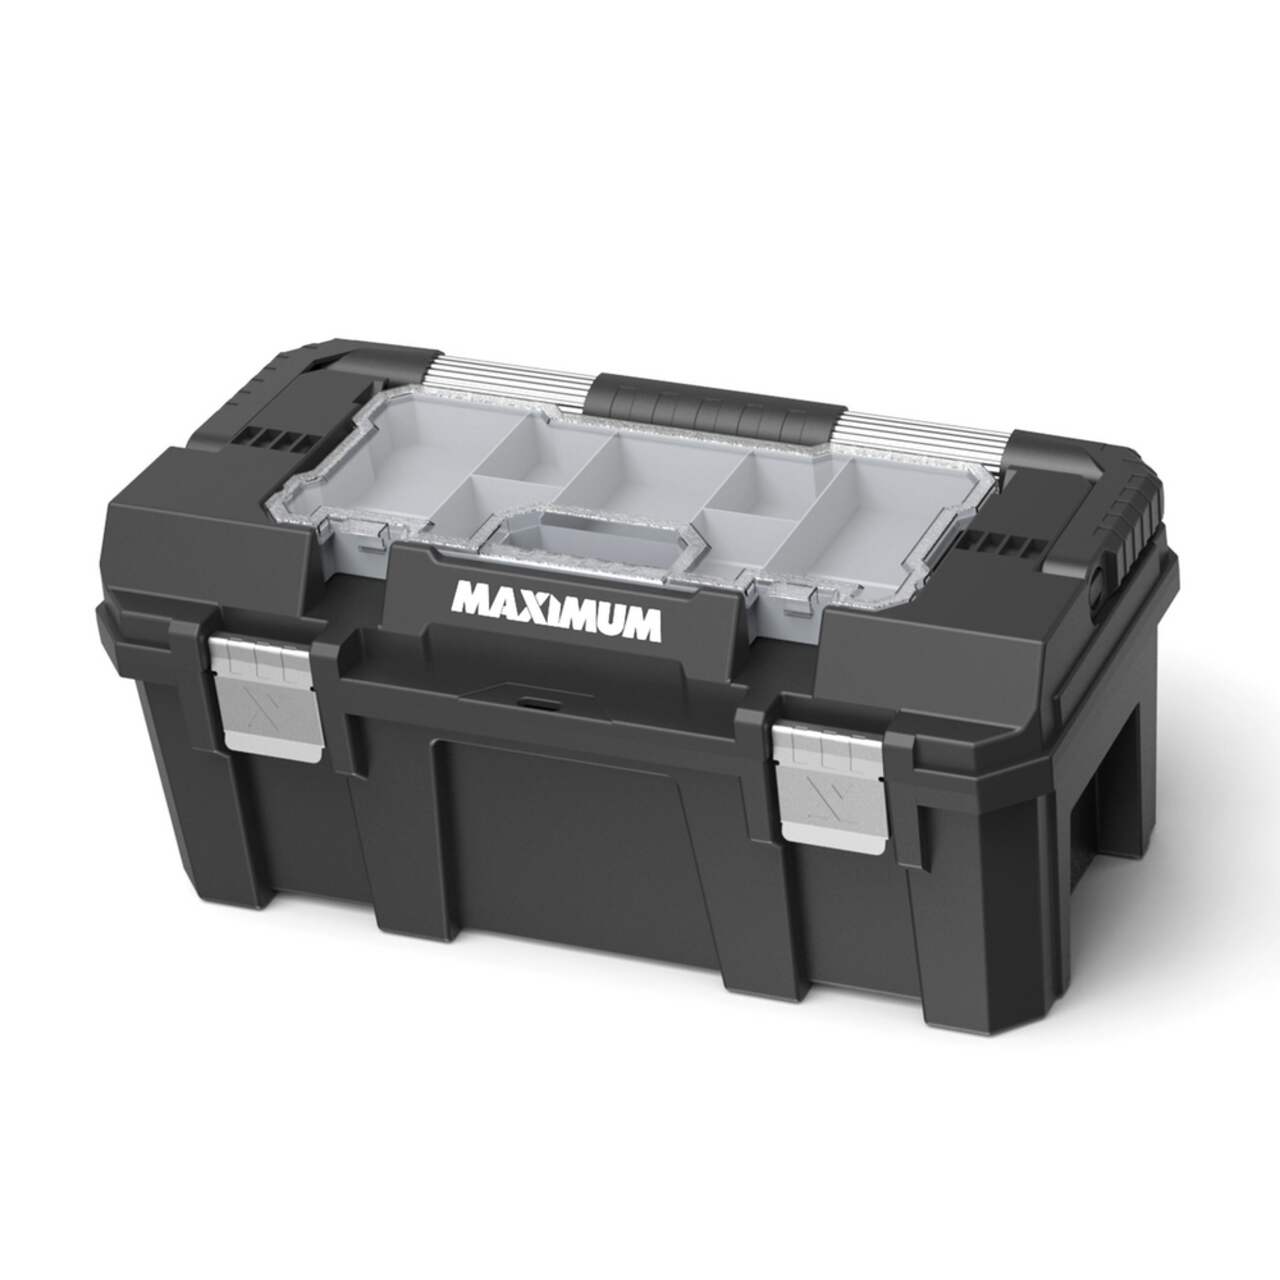 MAXIMUM Portable Plastic Tool Box w/ Removable Tray & Organizer, Black,  22-in